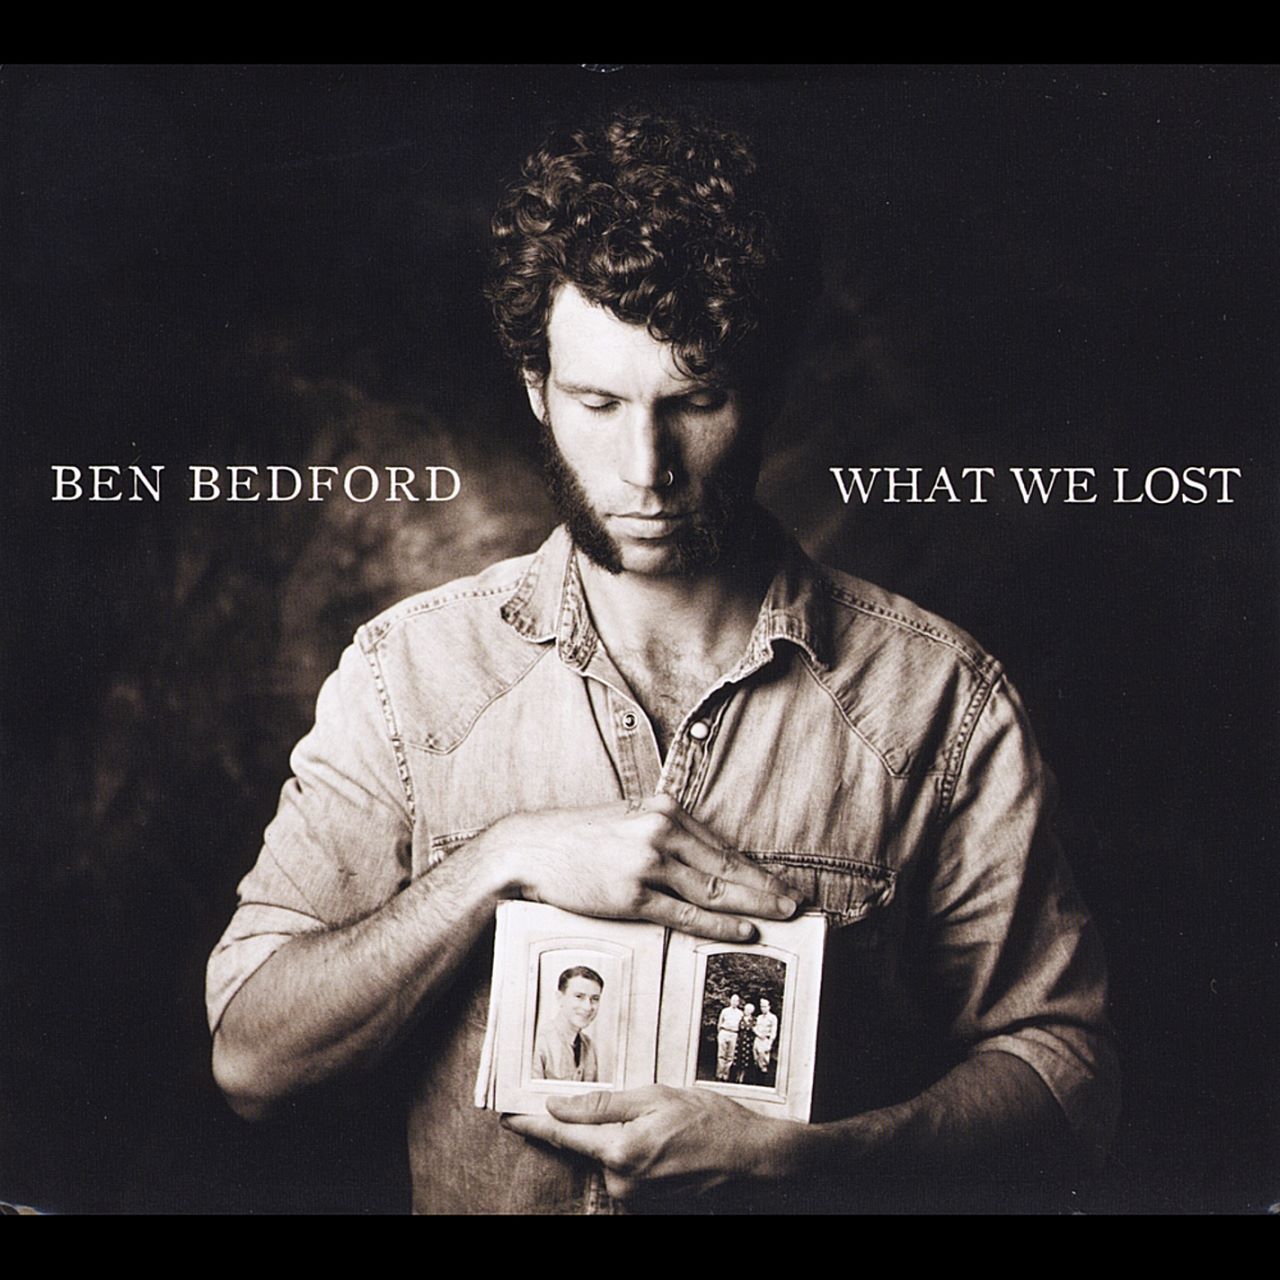 Ben Bedford - What We Lost cover album